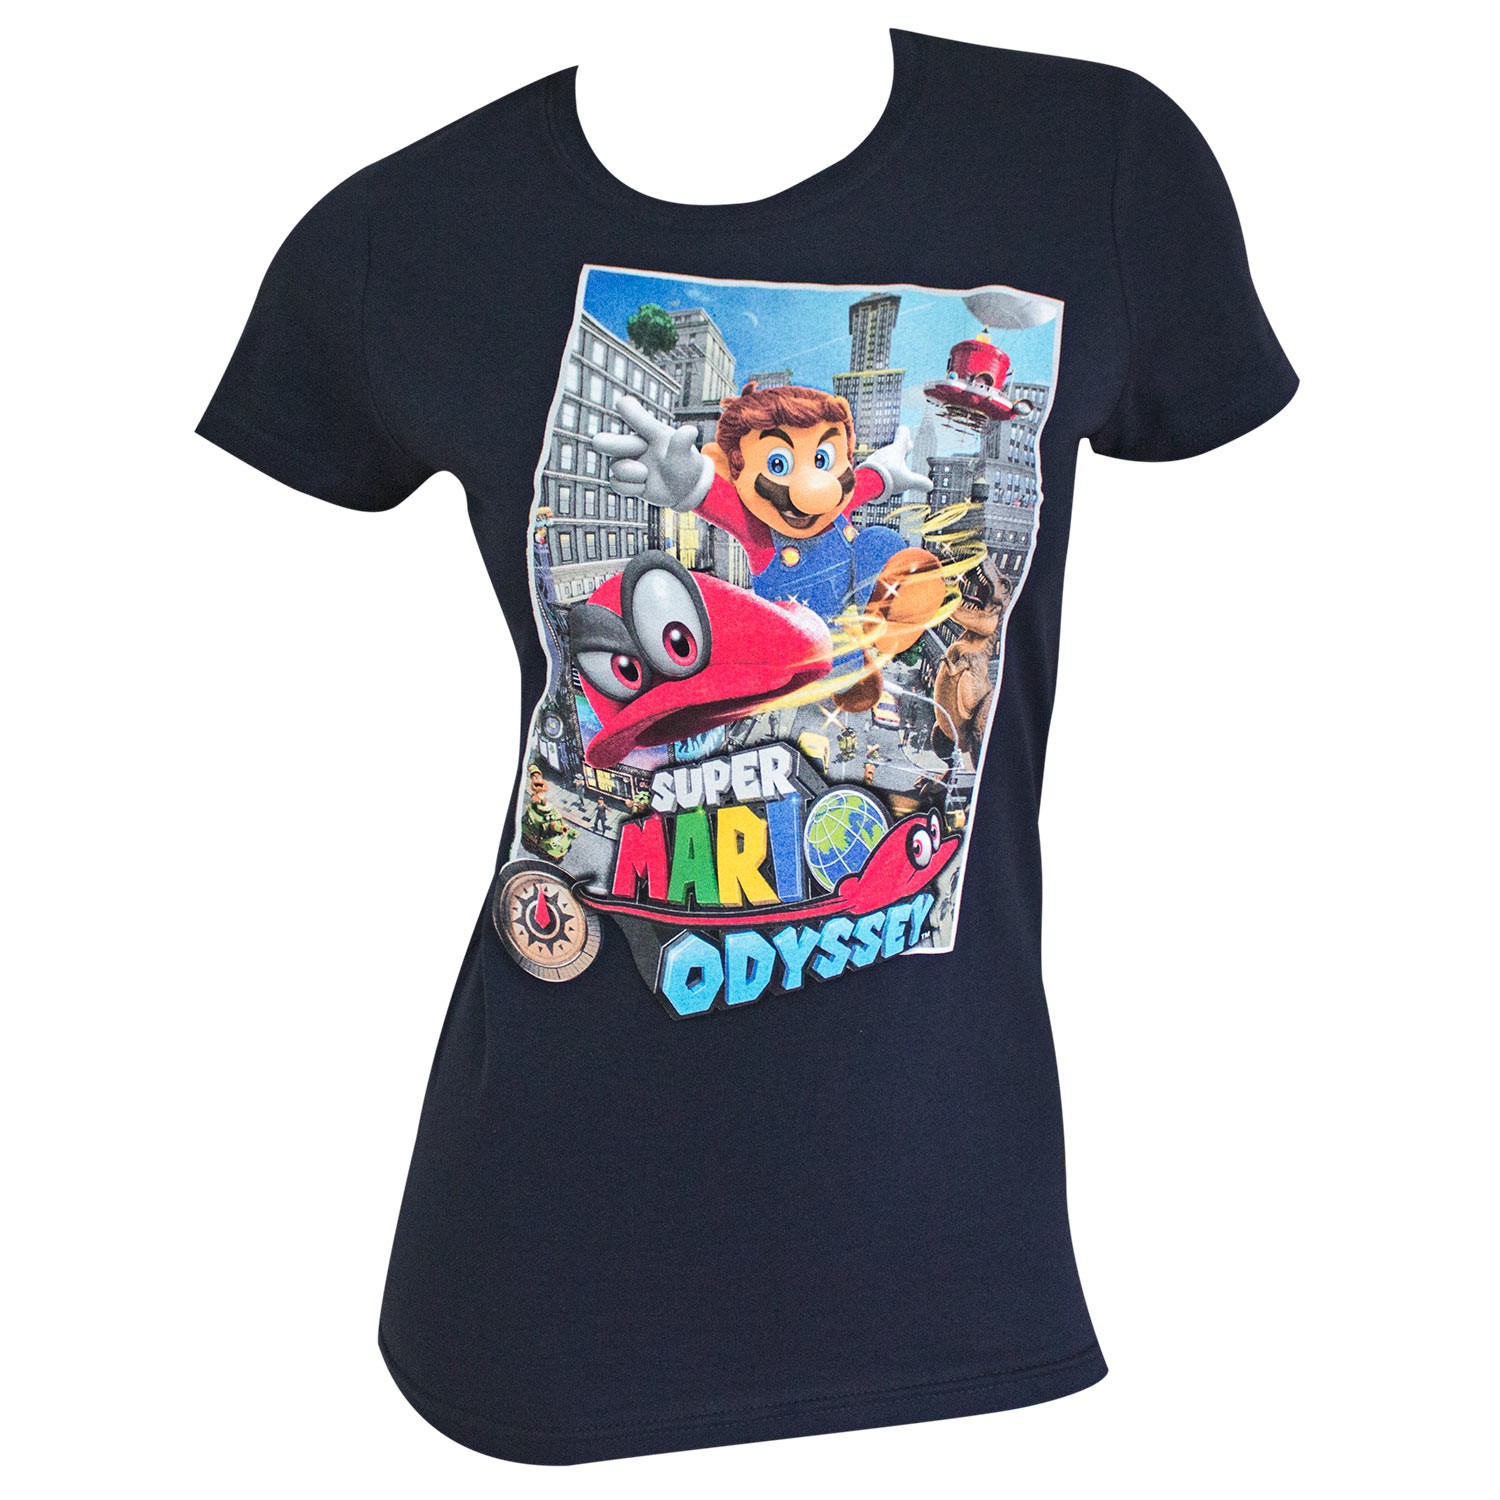 Super Mario Odyssey Flying Ladies Navy Blue Tee Shirt